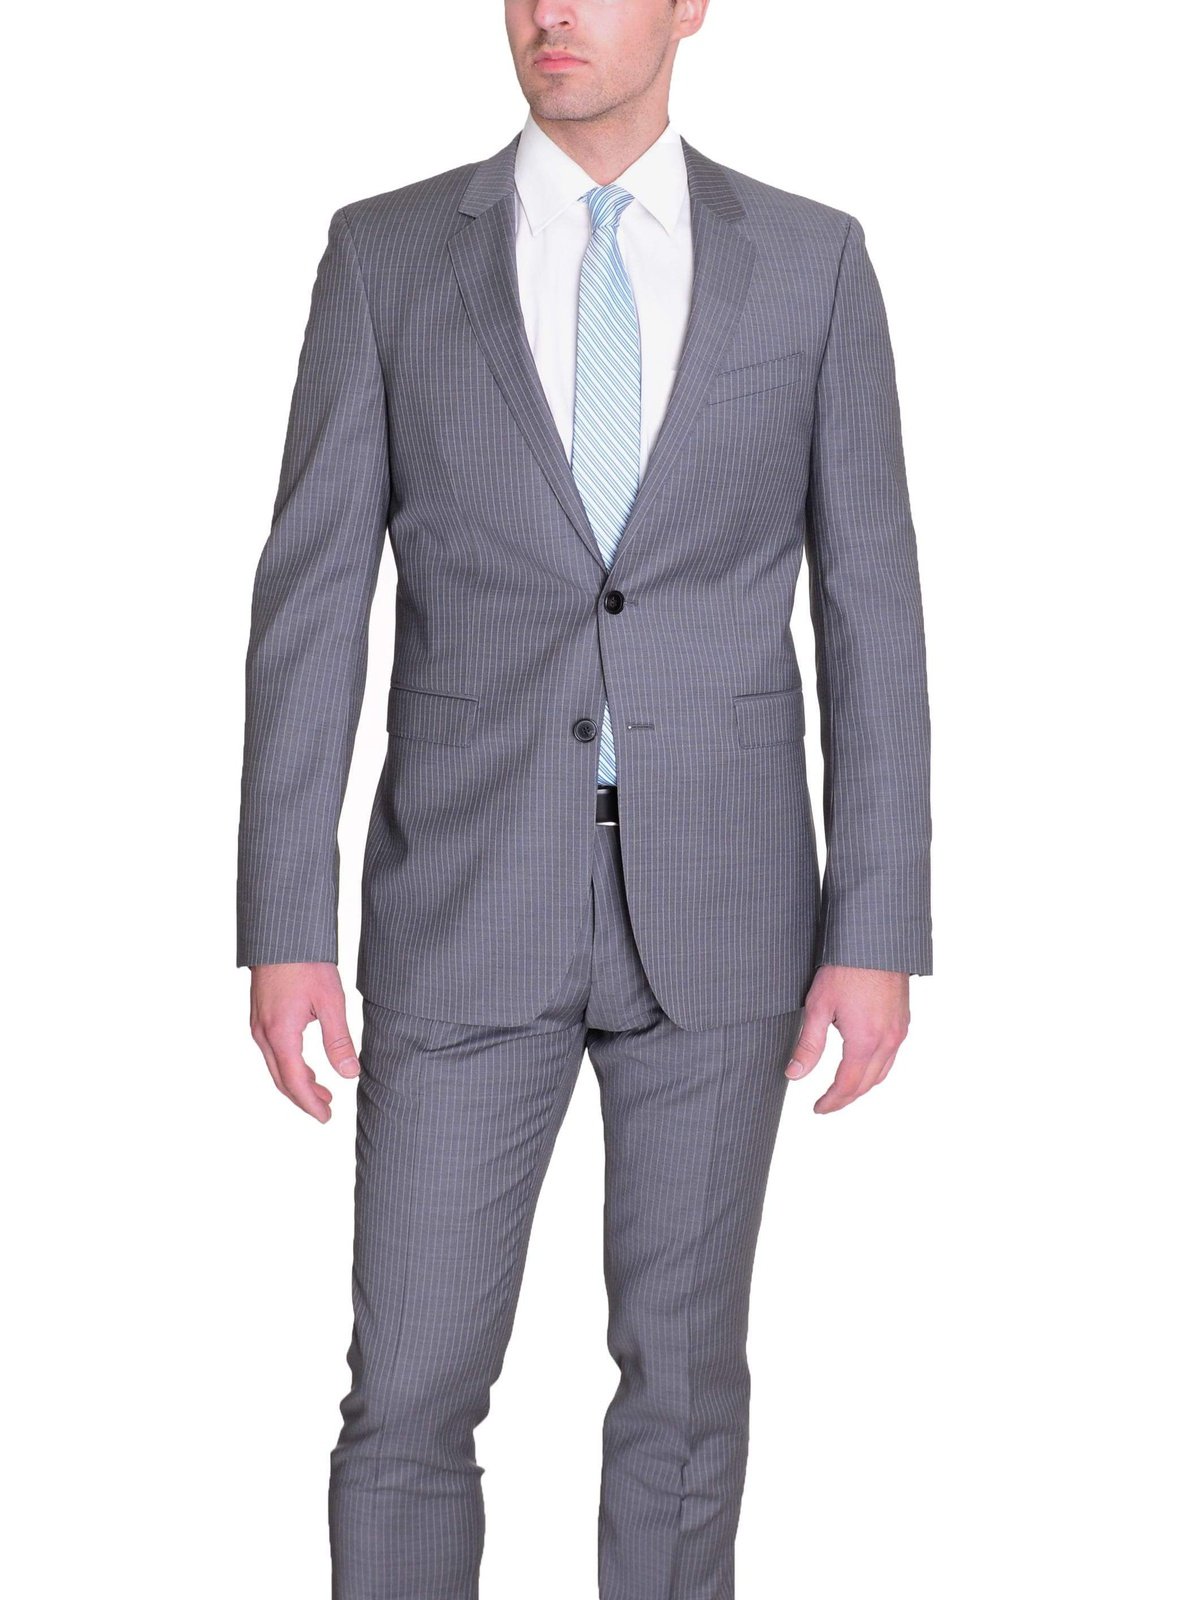 Mierda Serrado Jardines Hugo Boss Inwood/Winfield_1 Slim Fit Gray Striped Two Button Wool Suit |  eBay